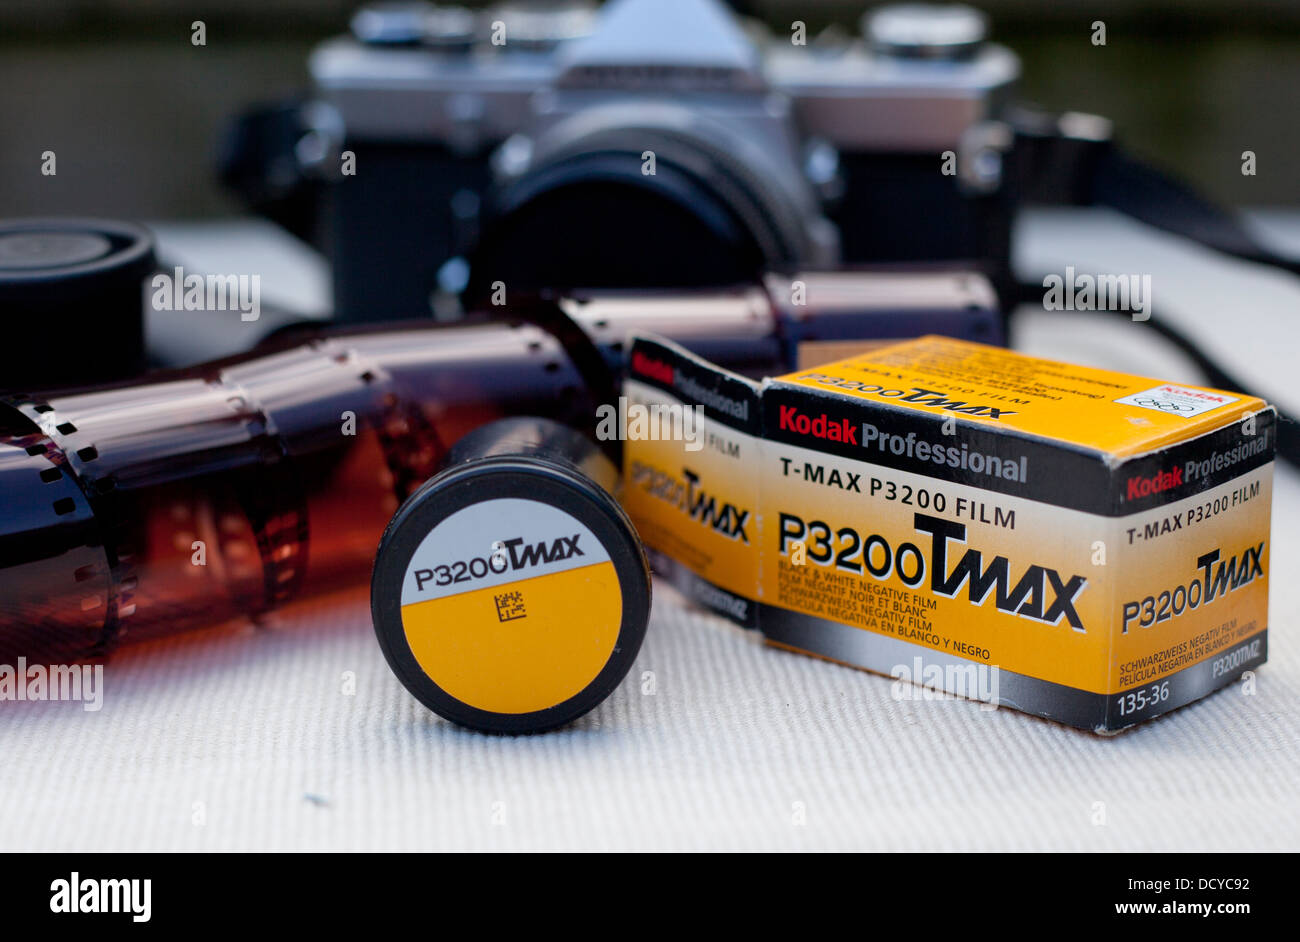 Film SLR camera with Kodak film Stock Photo